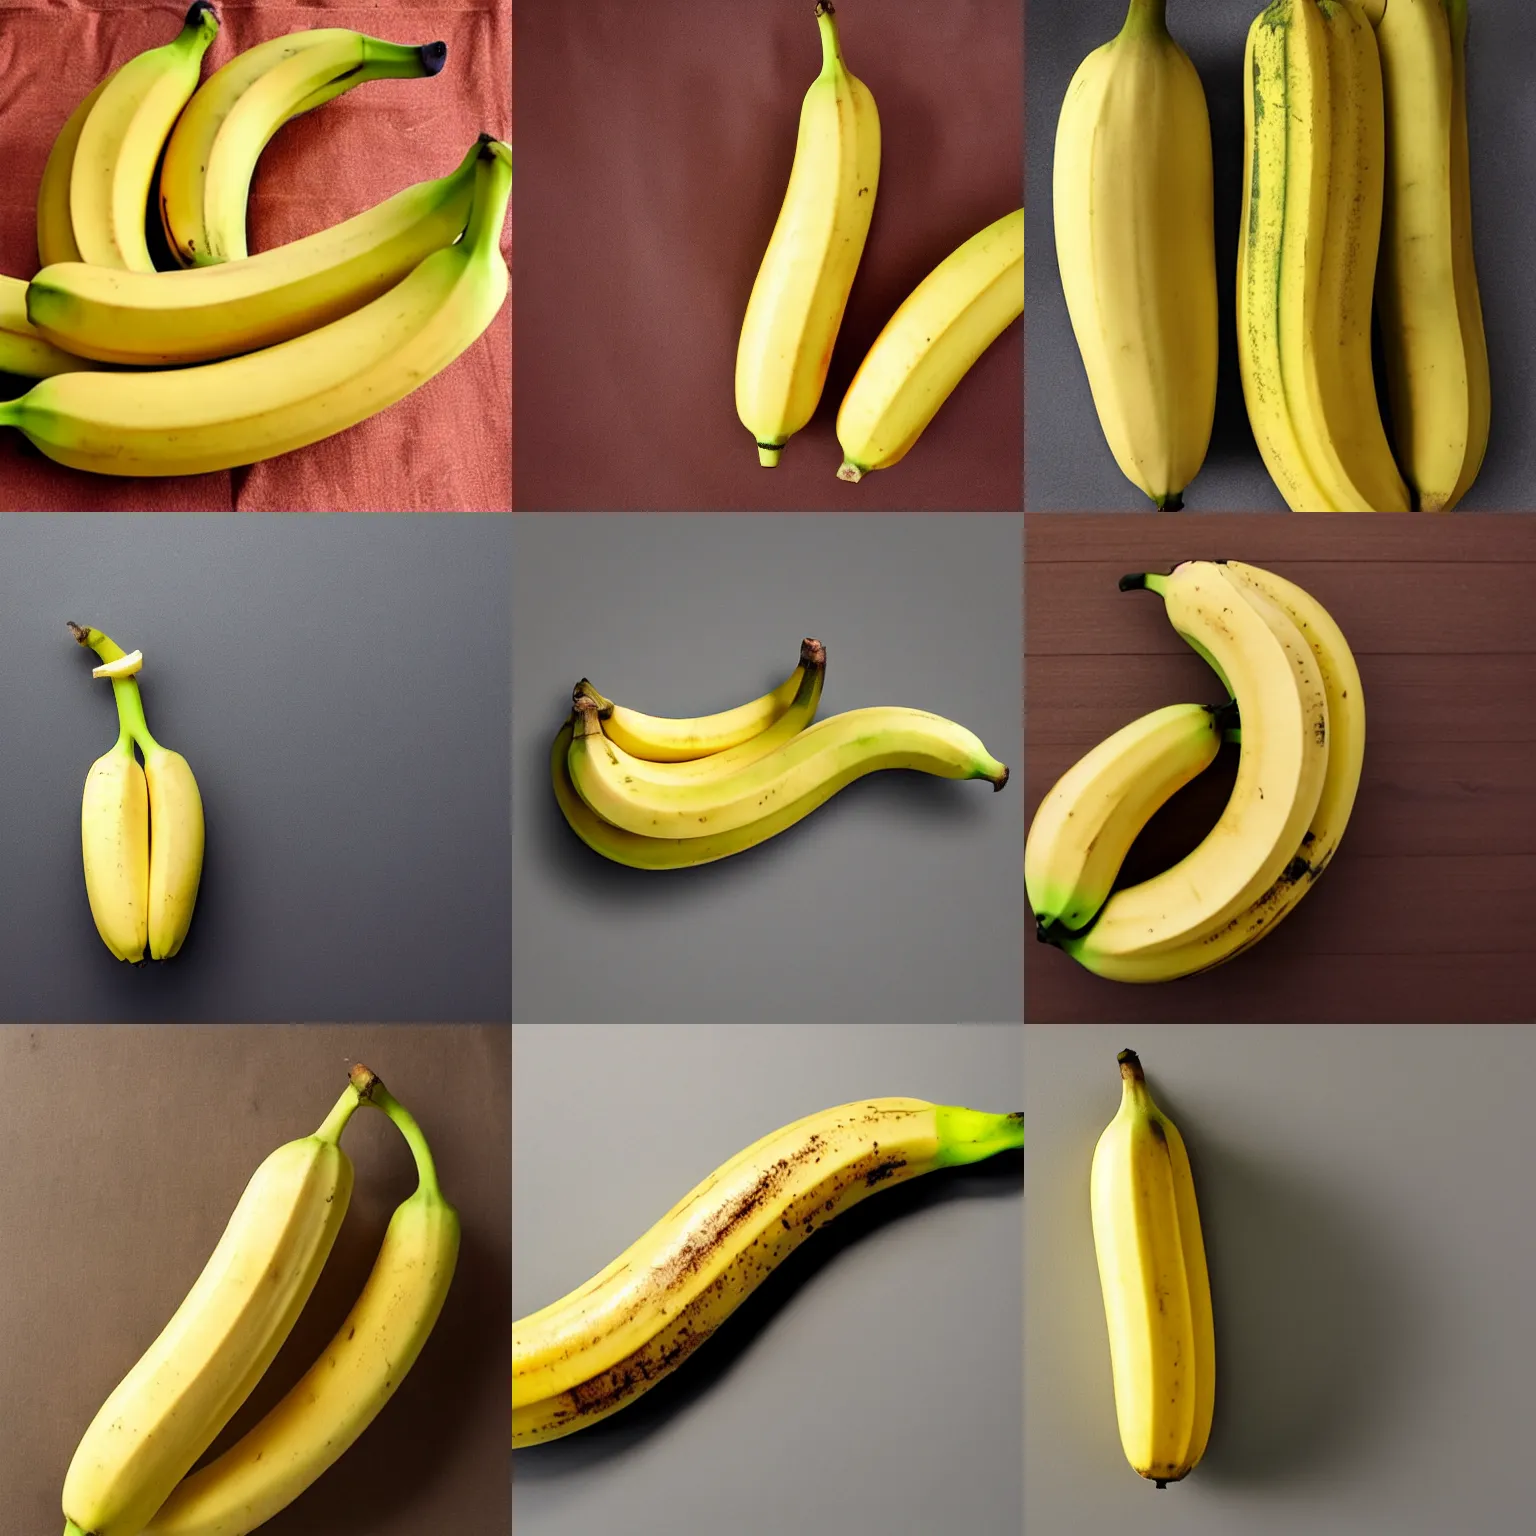 Prompt: a perfect banana